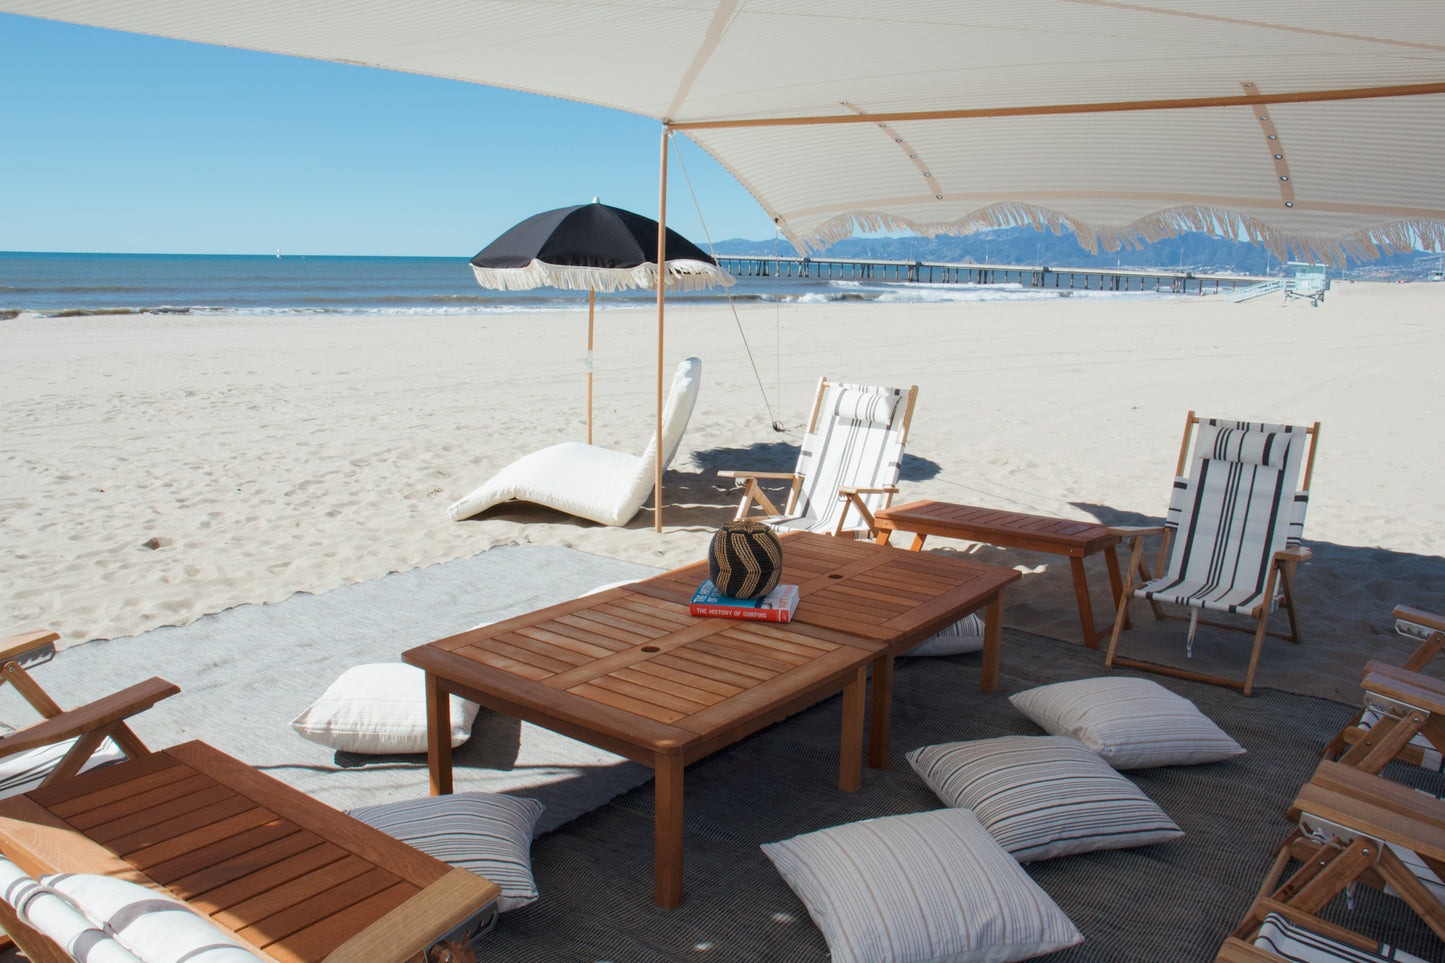 Beach Lounge Cabana Rentals Los Angeles